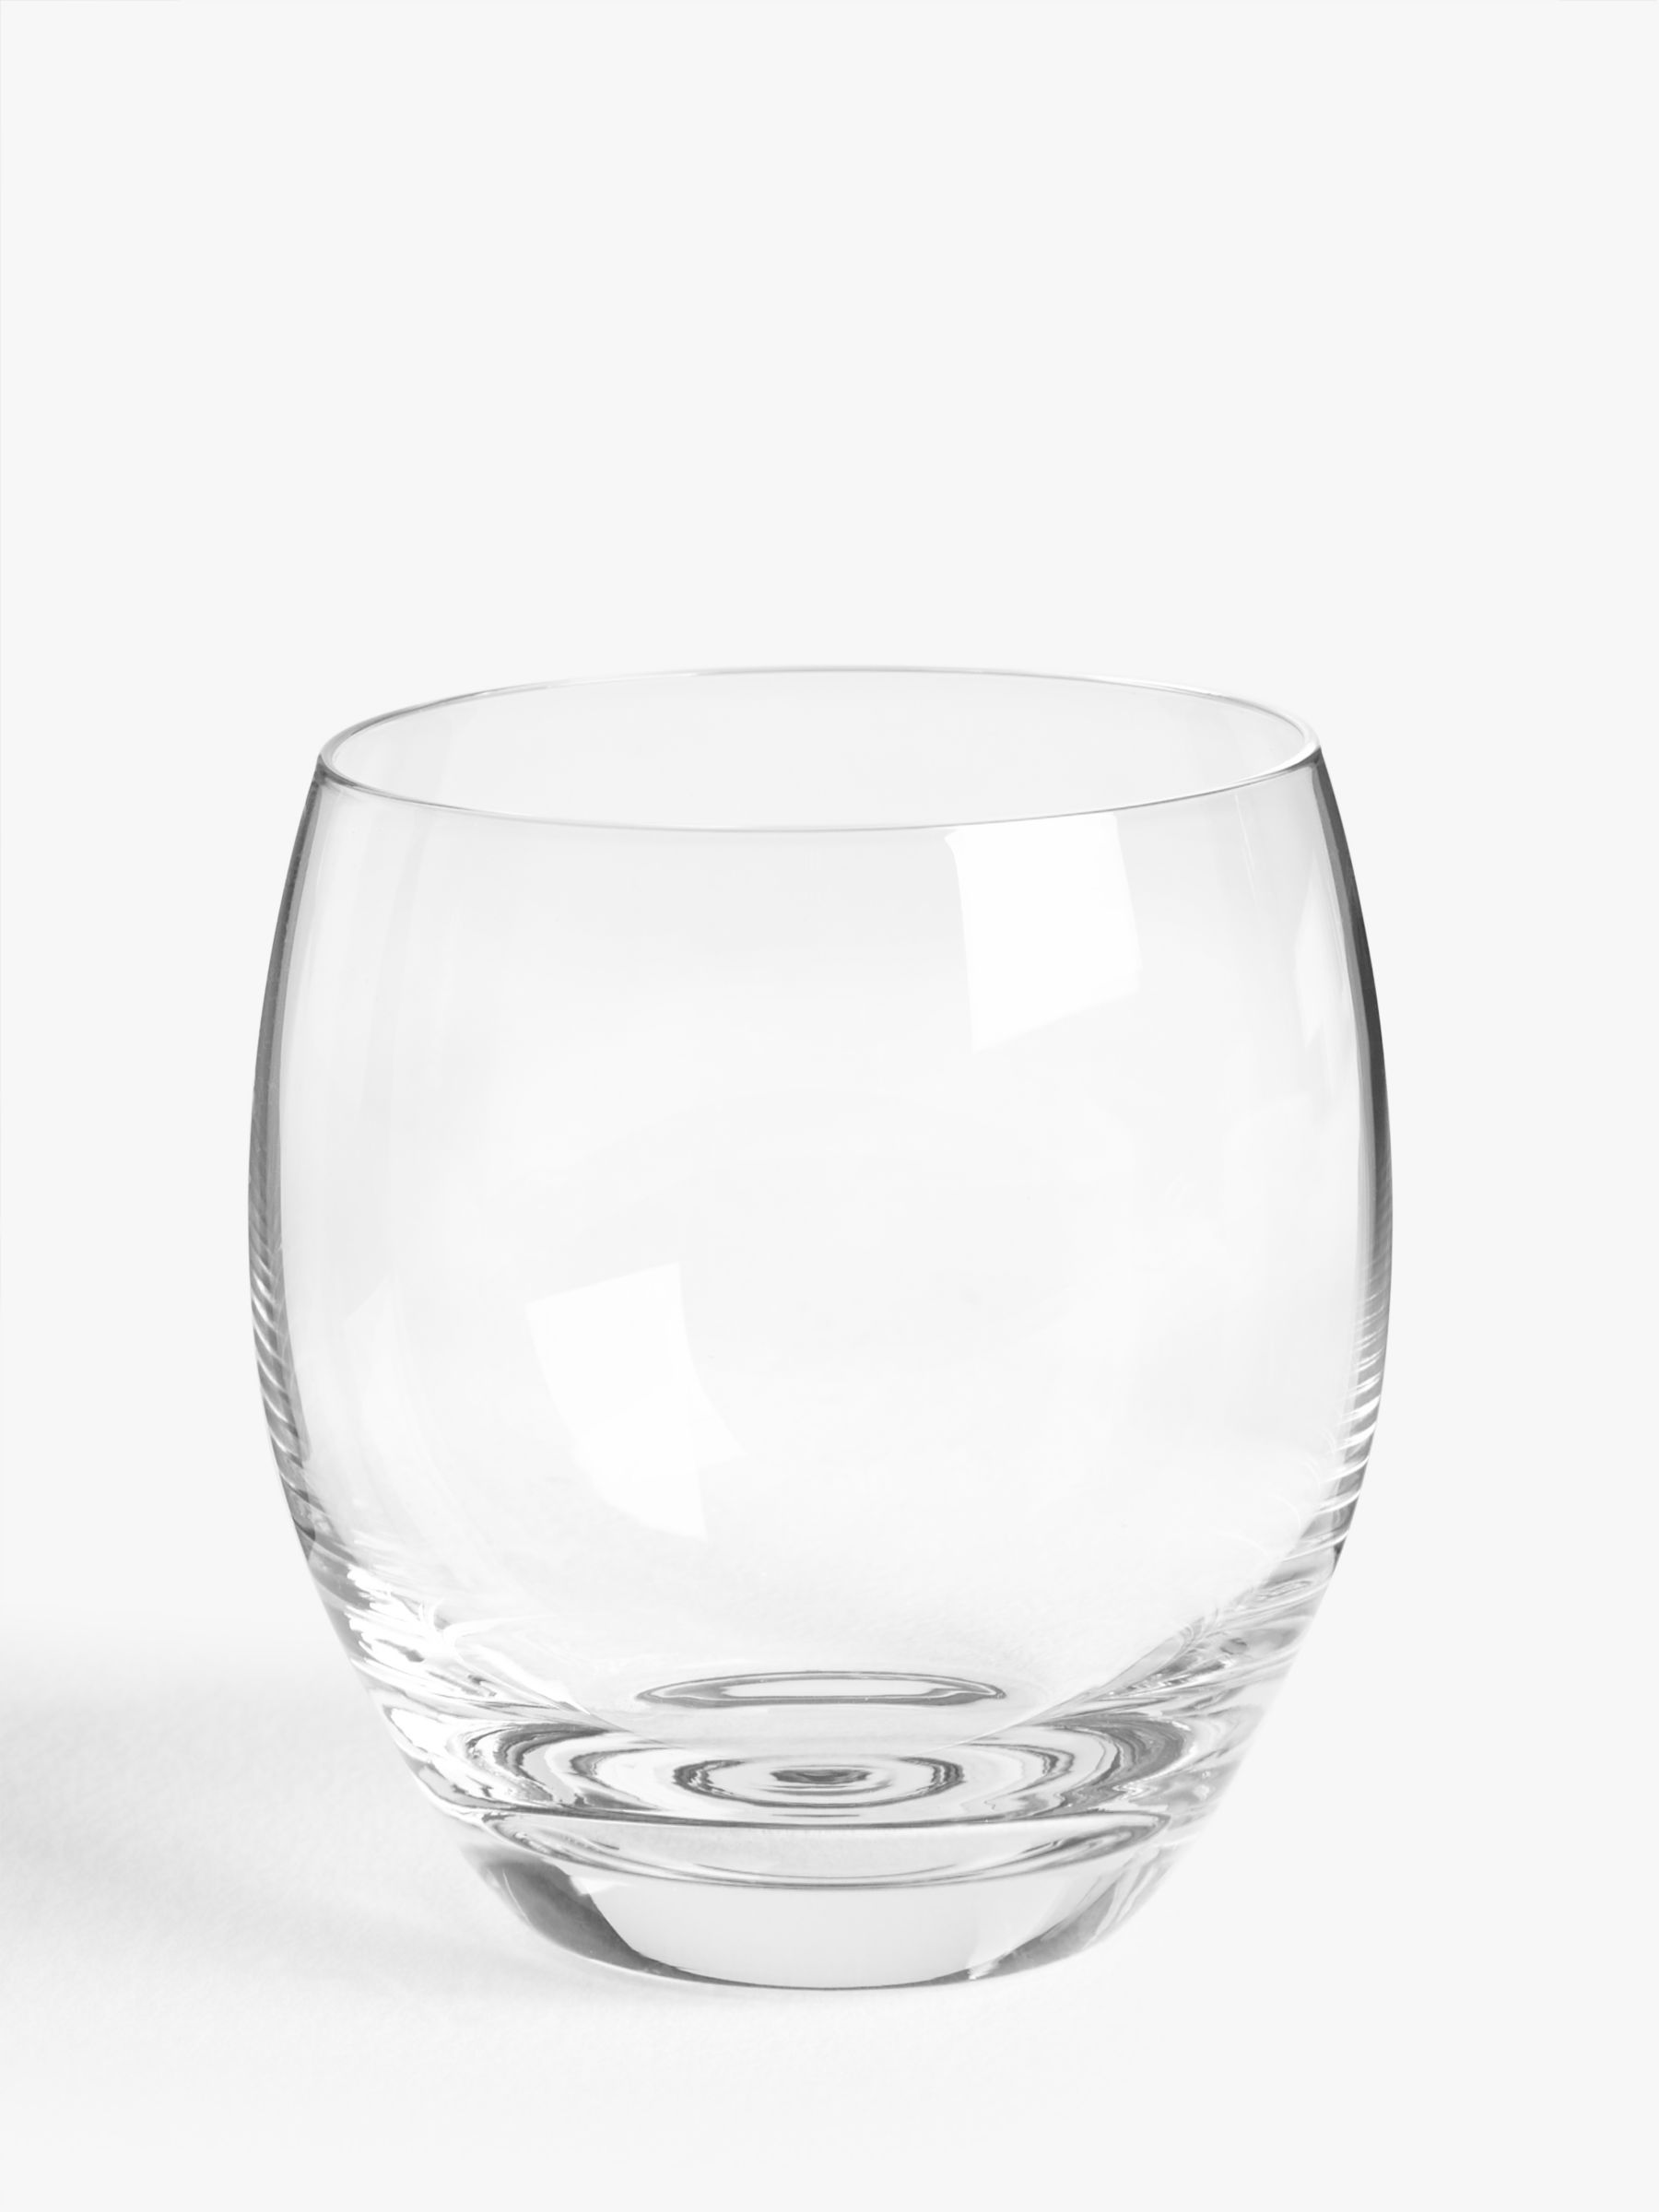 John Lewis & Partners John Lewis & Partners Gin Glass Tumblers, Set of 4, 350ml, Clear